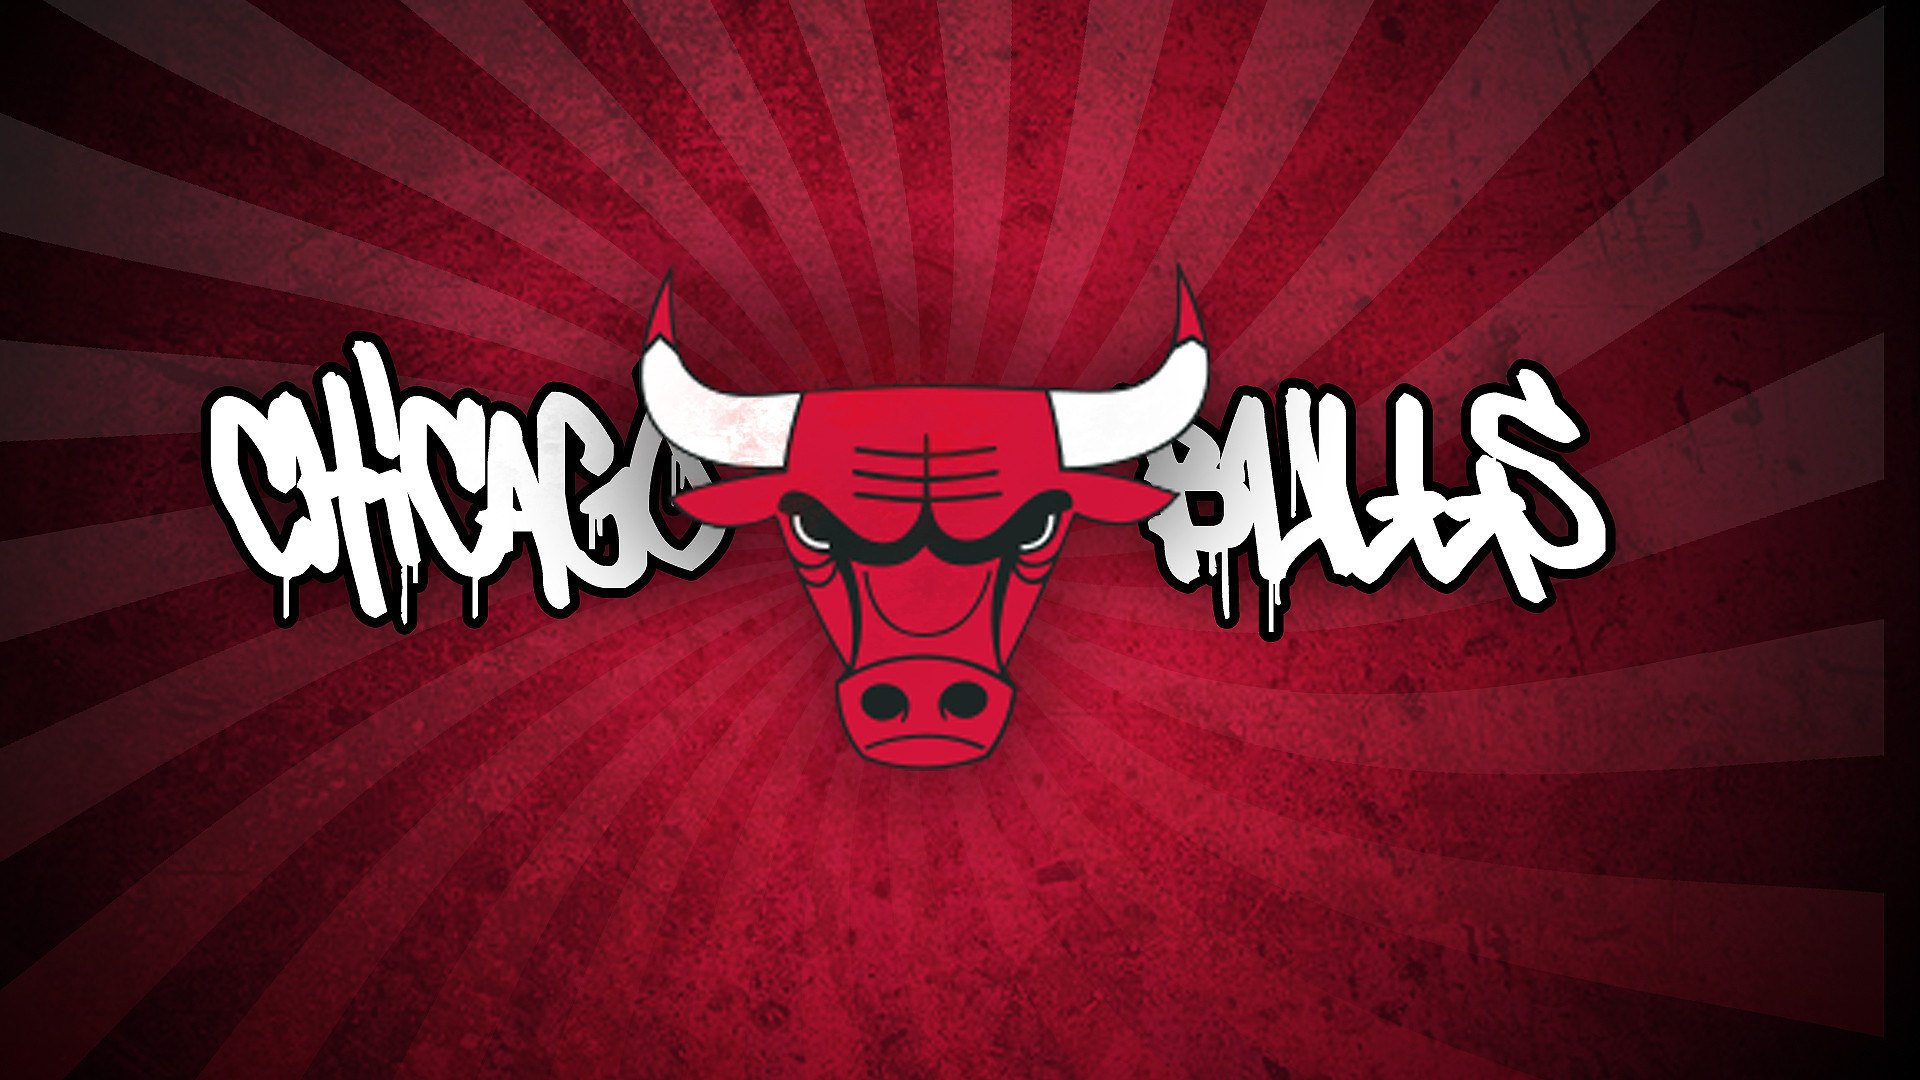 Chicago Bulls 3d Wallpaper